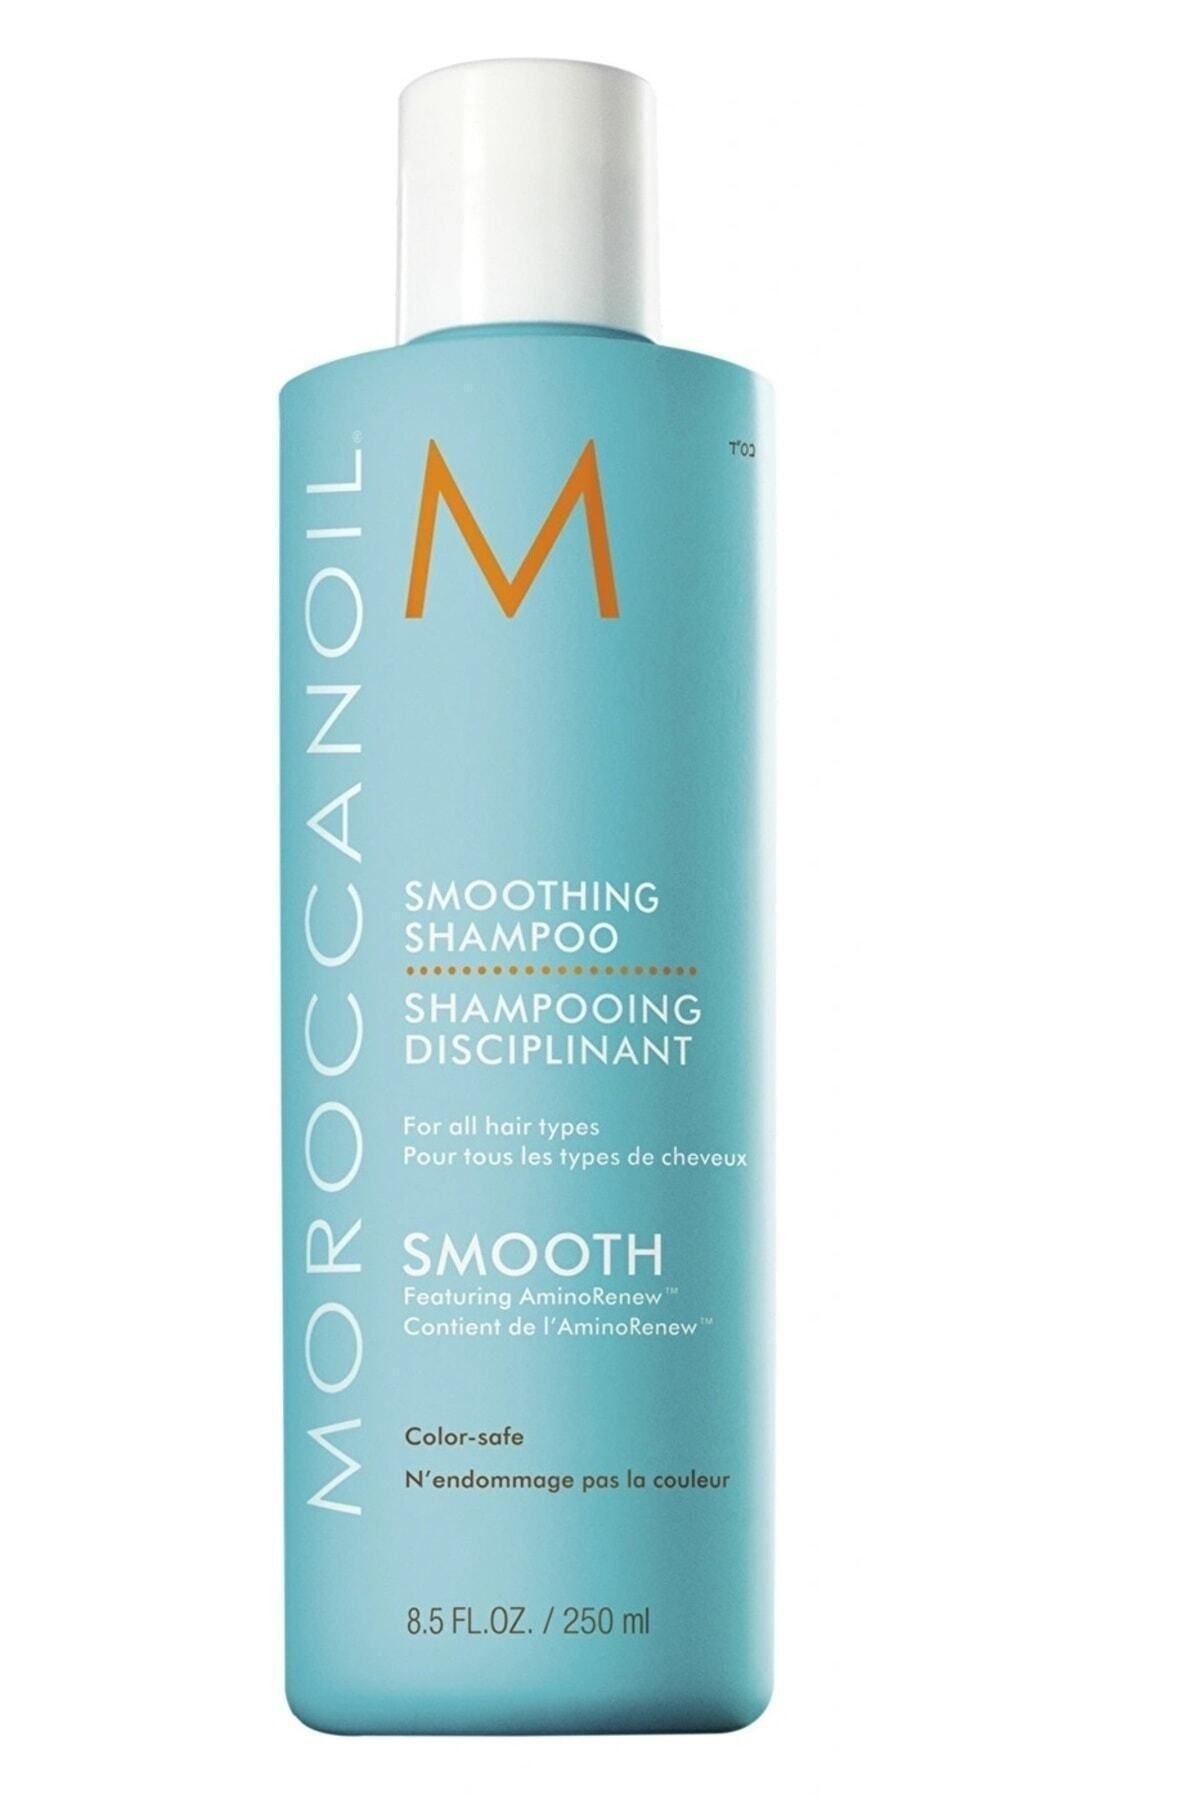 Moroccanoil MCOIL Smoothing: Gliserinli Saç Şampuanı (Parabensiz, 250 ml)  SEVGIGUL COSMETIC 57